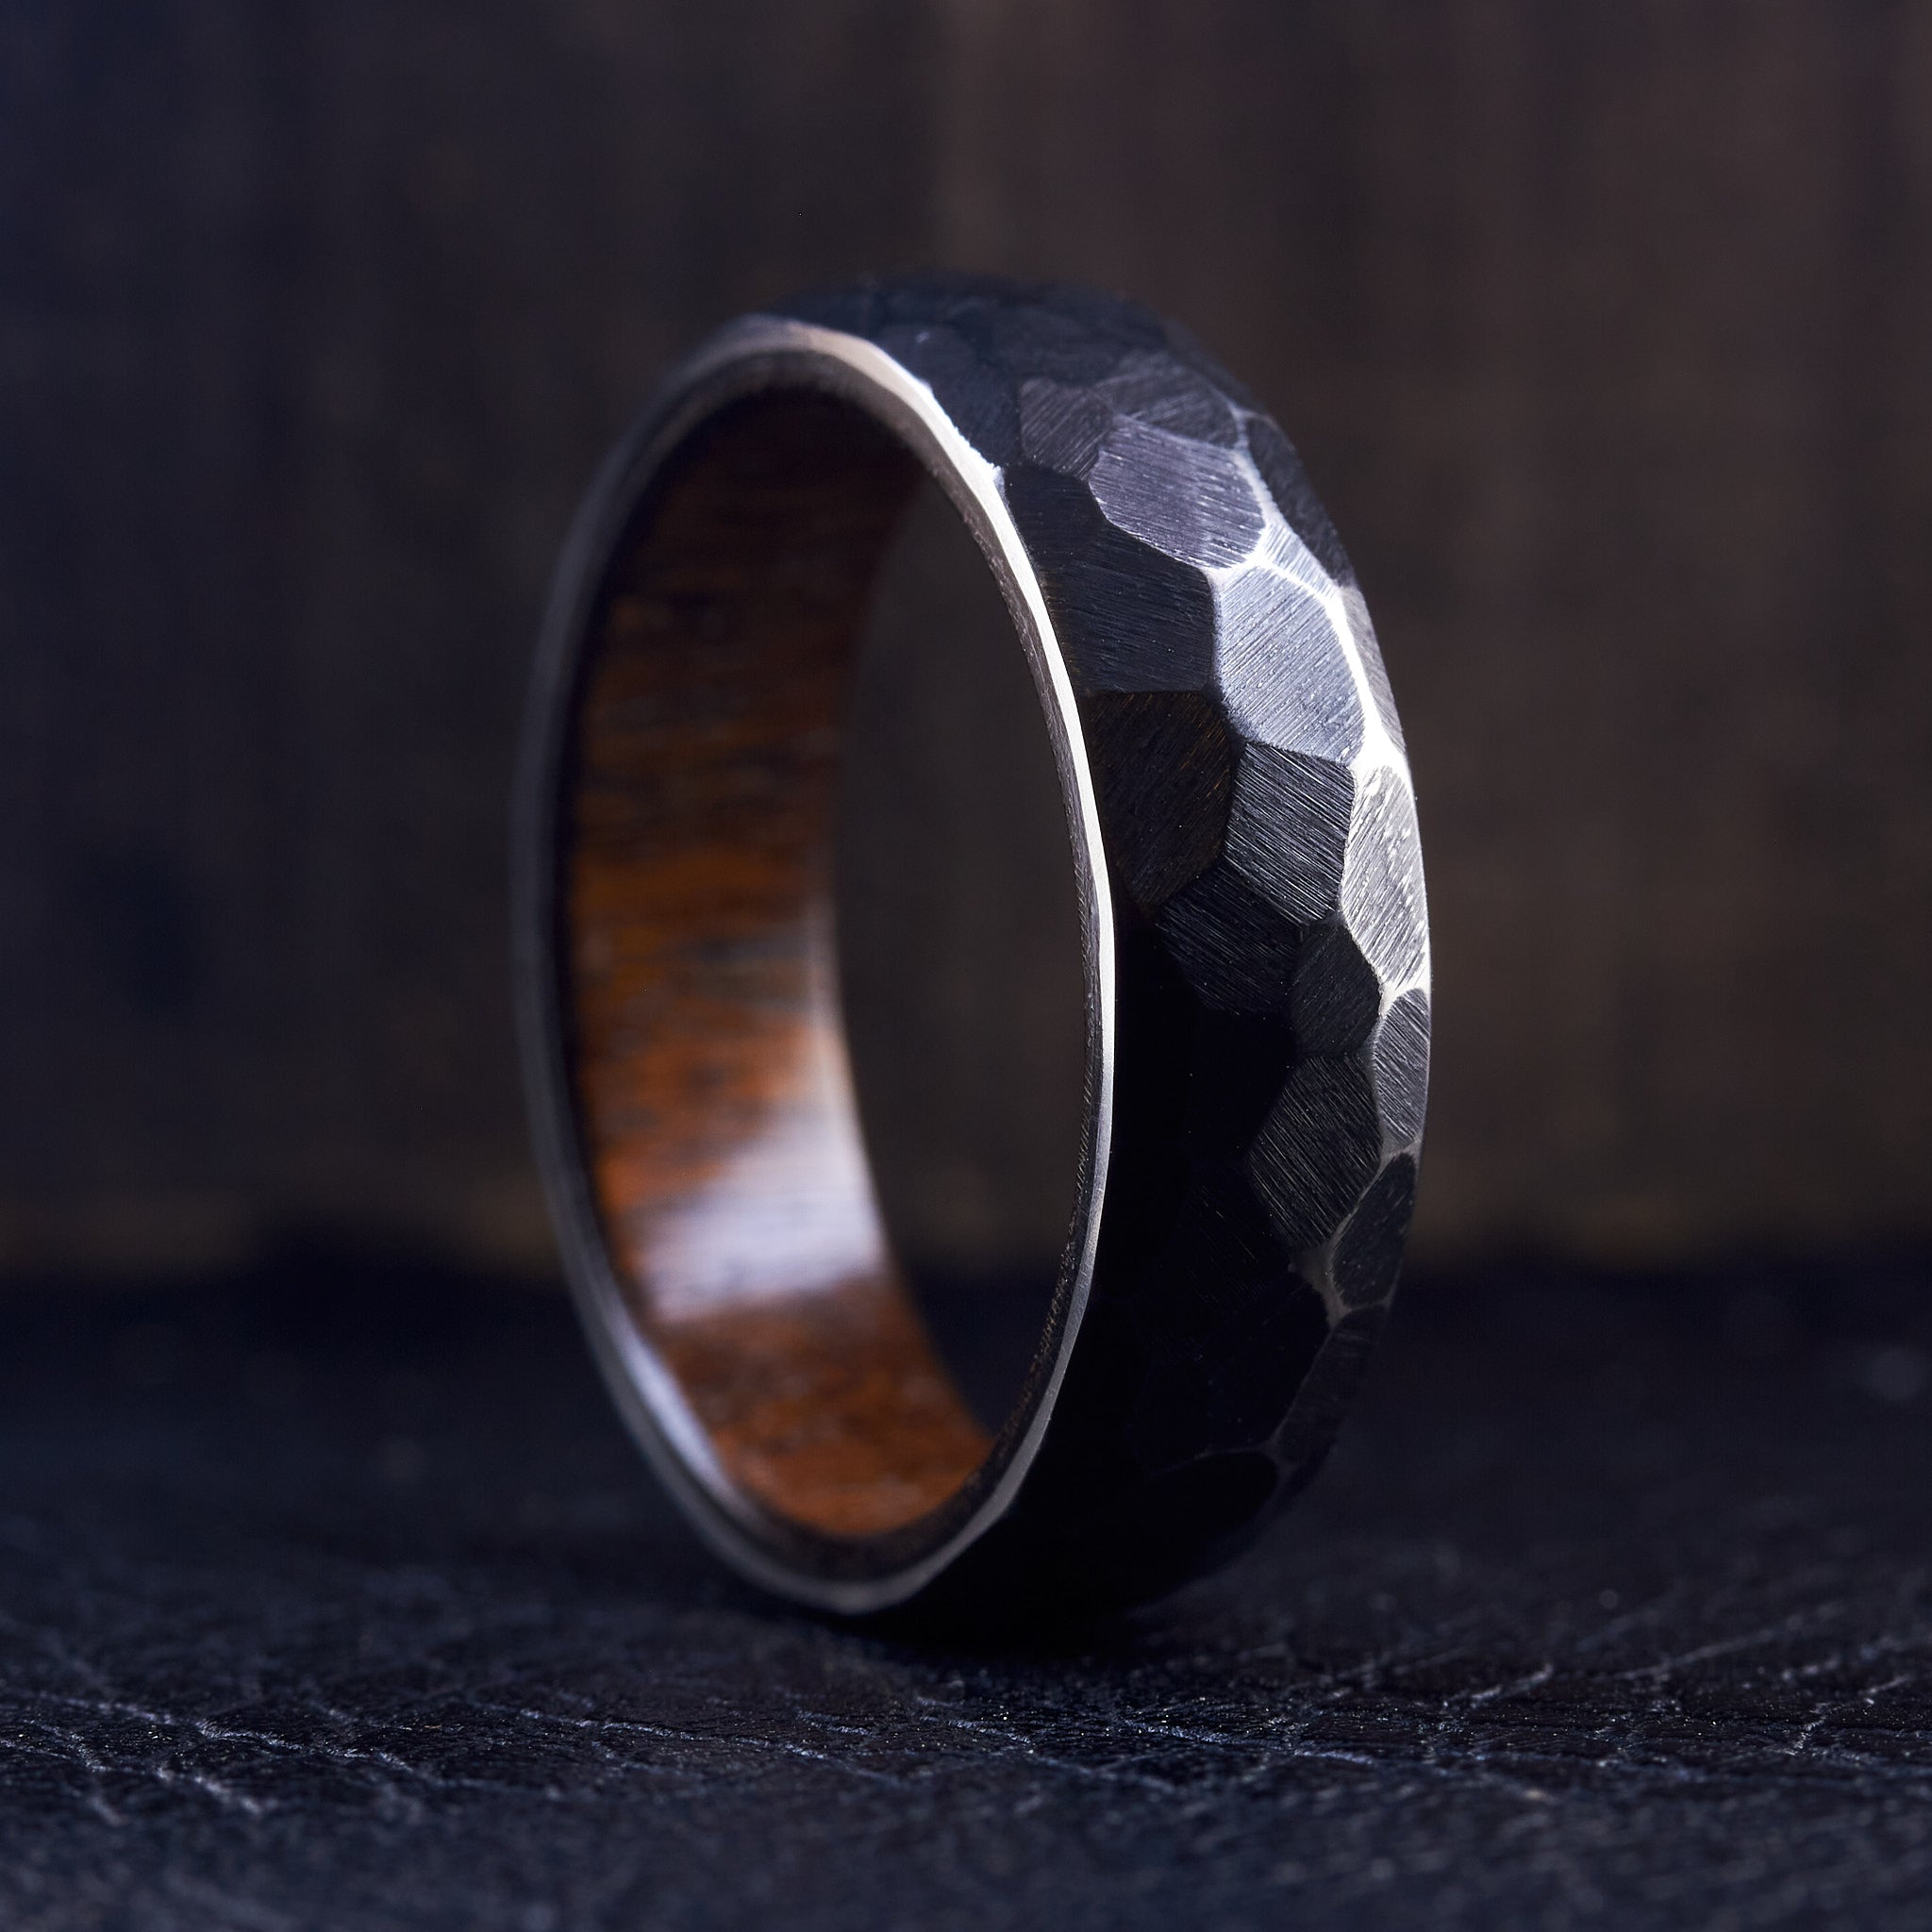 Hammered Black Zirconium & Wood ring